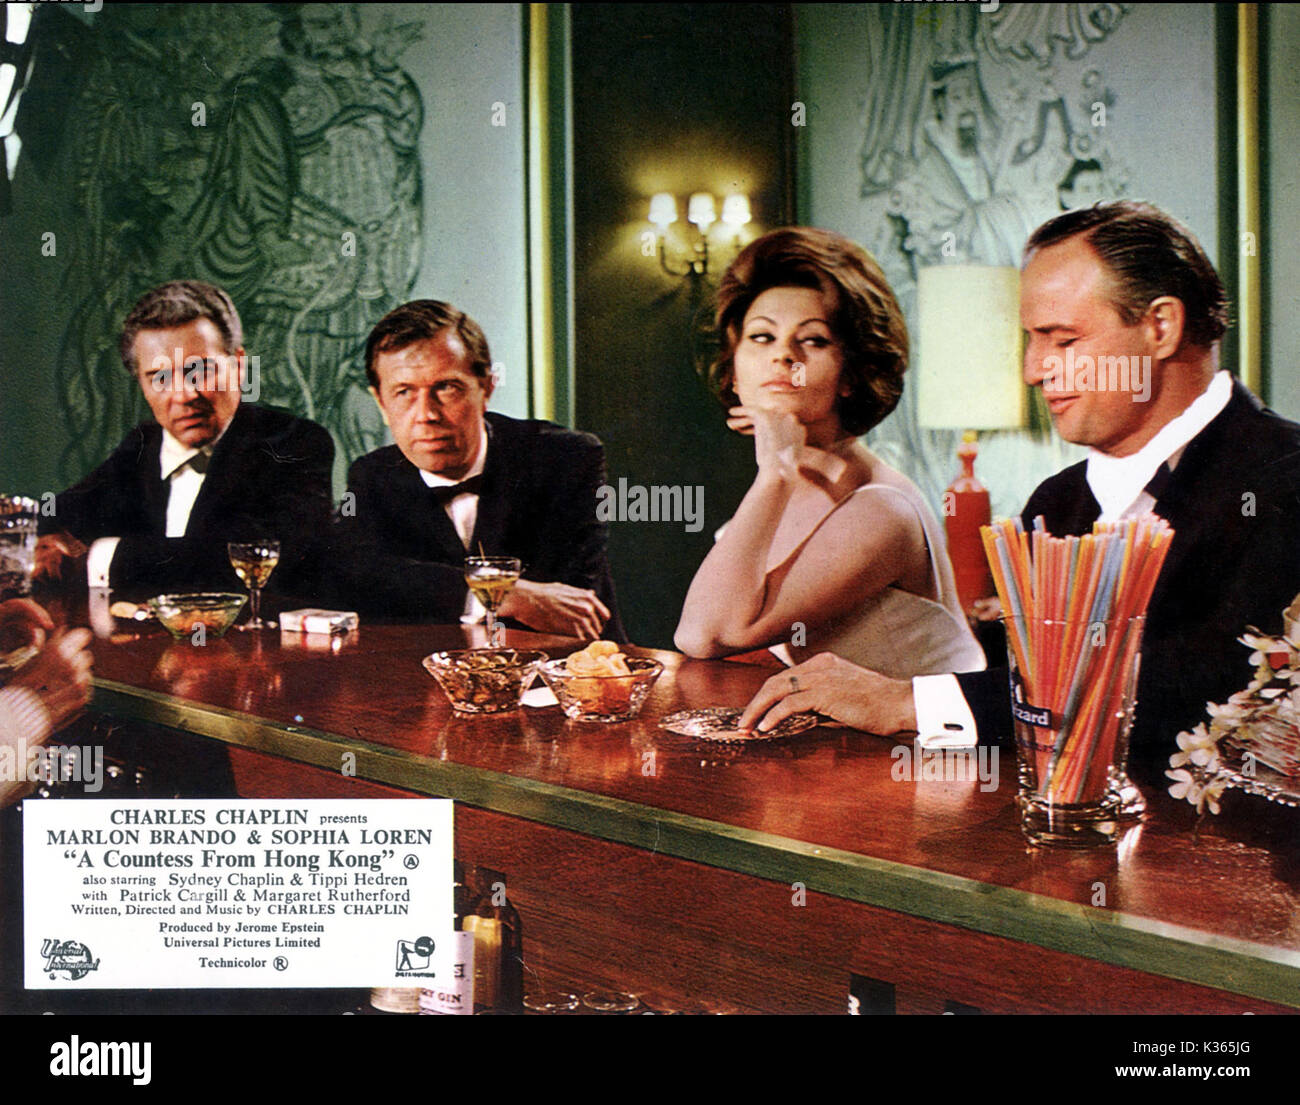 Una contessa DI HONG KONG MICHAEL MEDWIN, Sophia Loren, Marlon Brando data: 1967 Foto Stock